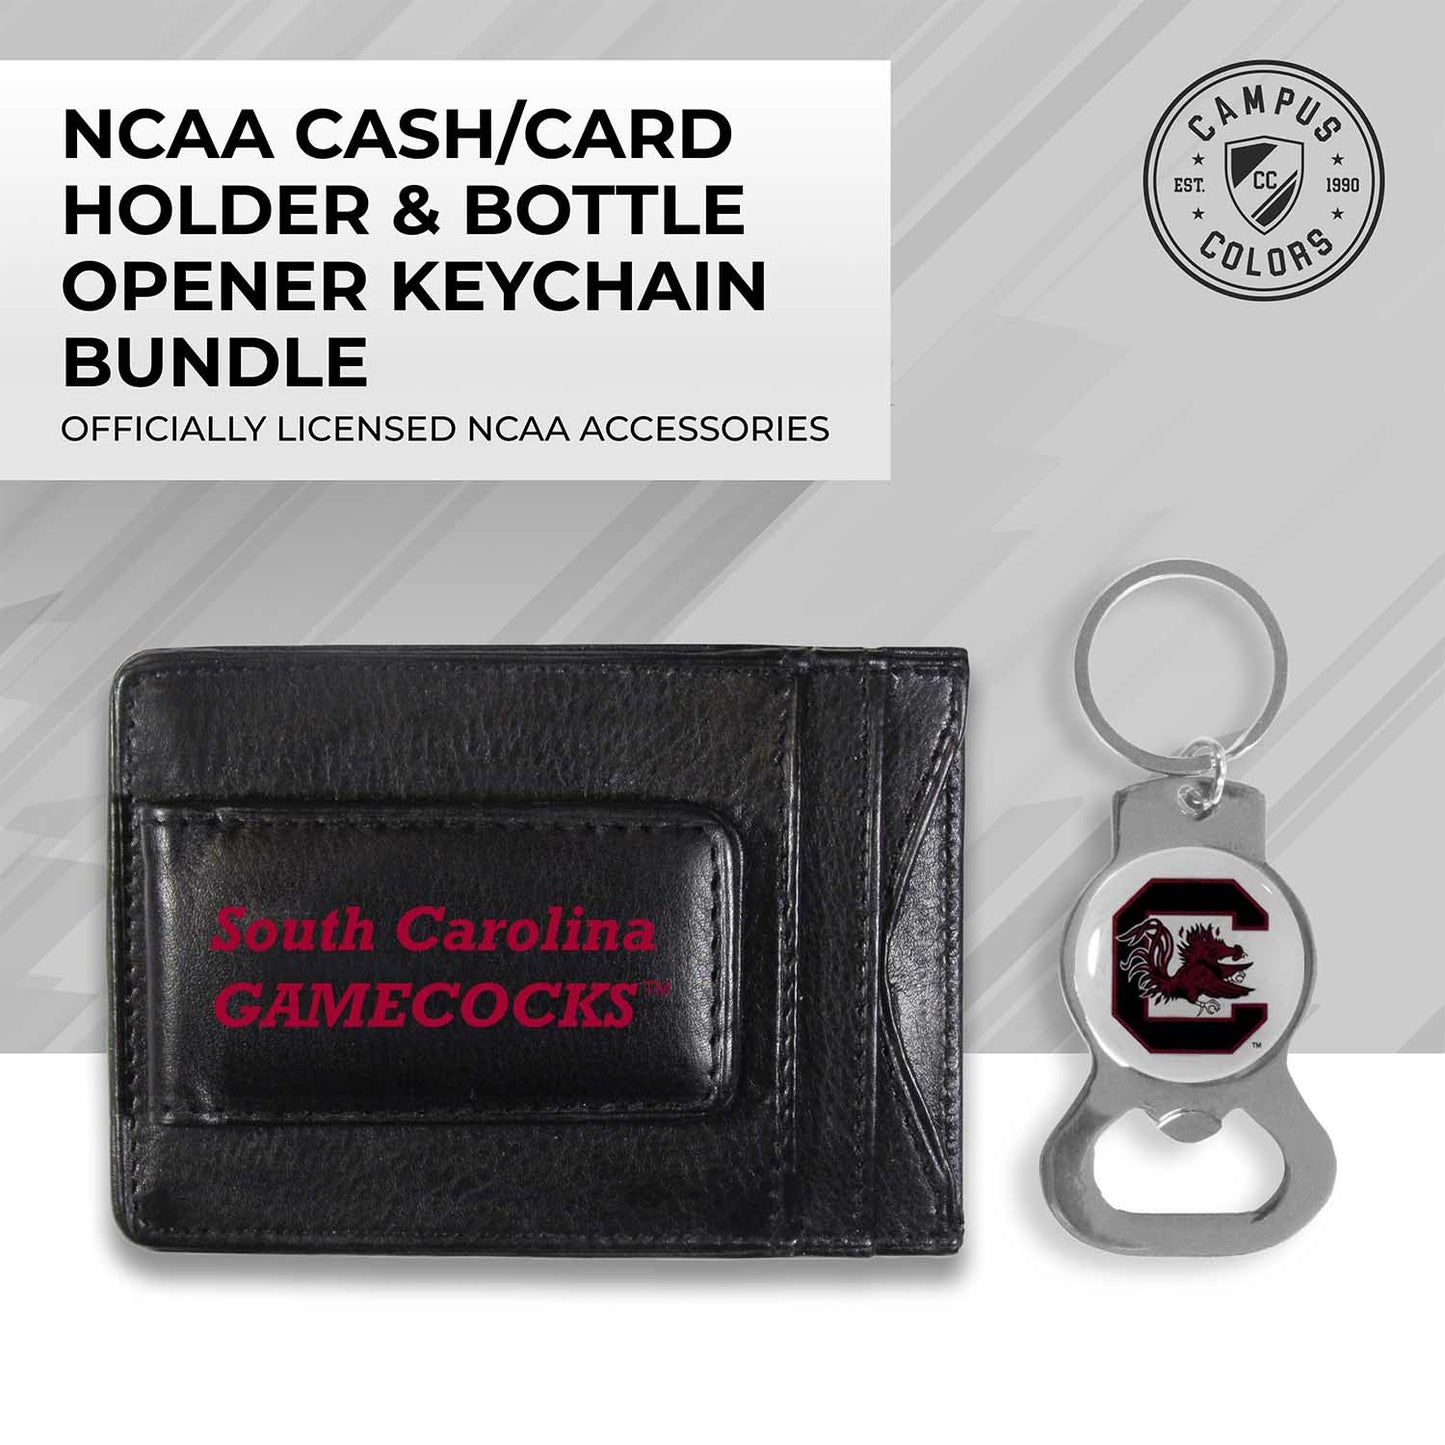 South Carolina Gamecocks School Logo Leather Card/Cash Holder and Bottle Opener Keychain Bundle - Black